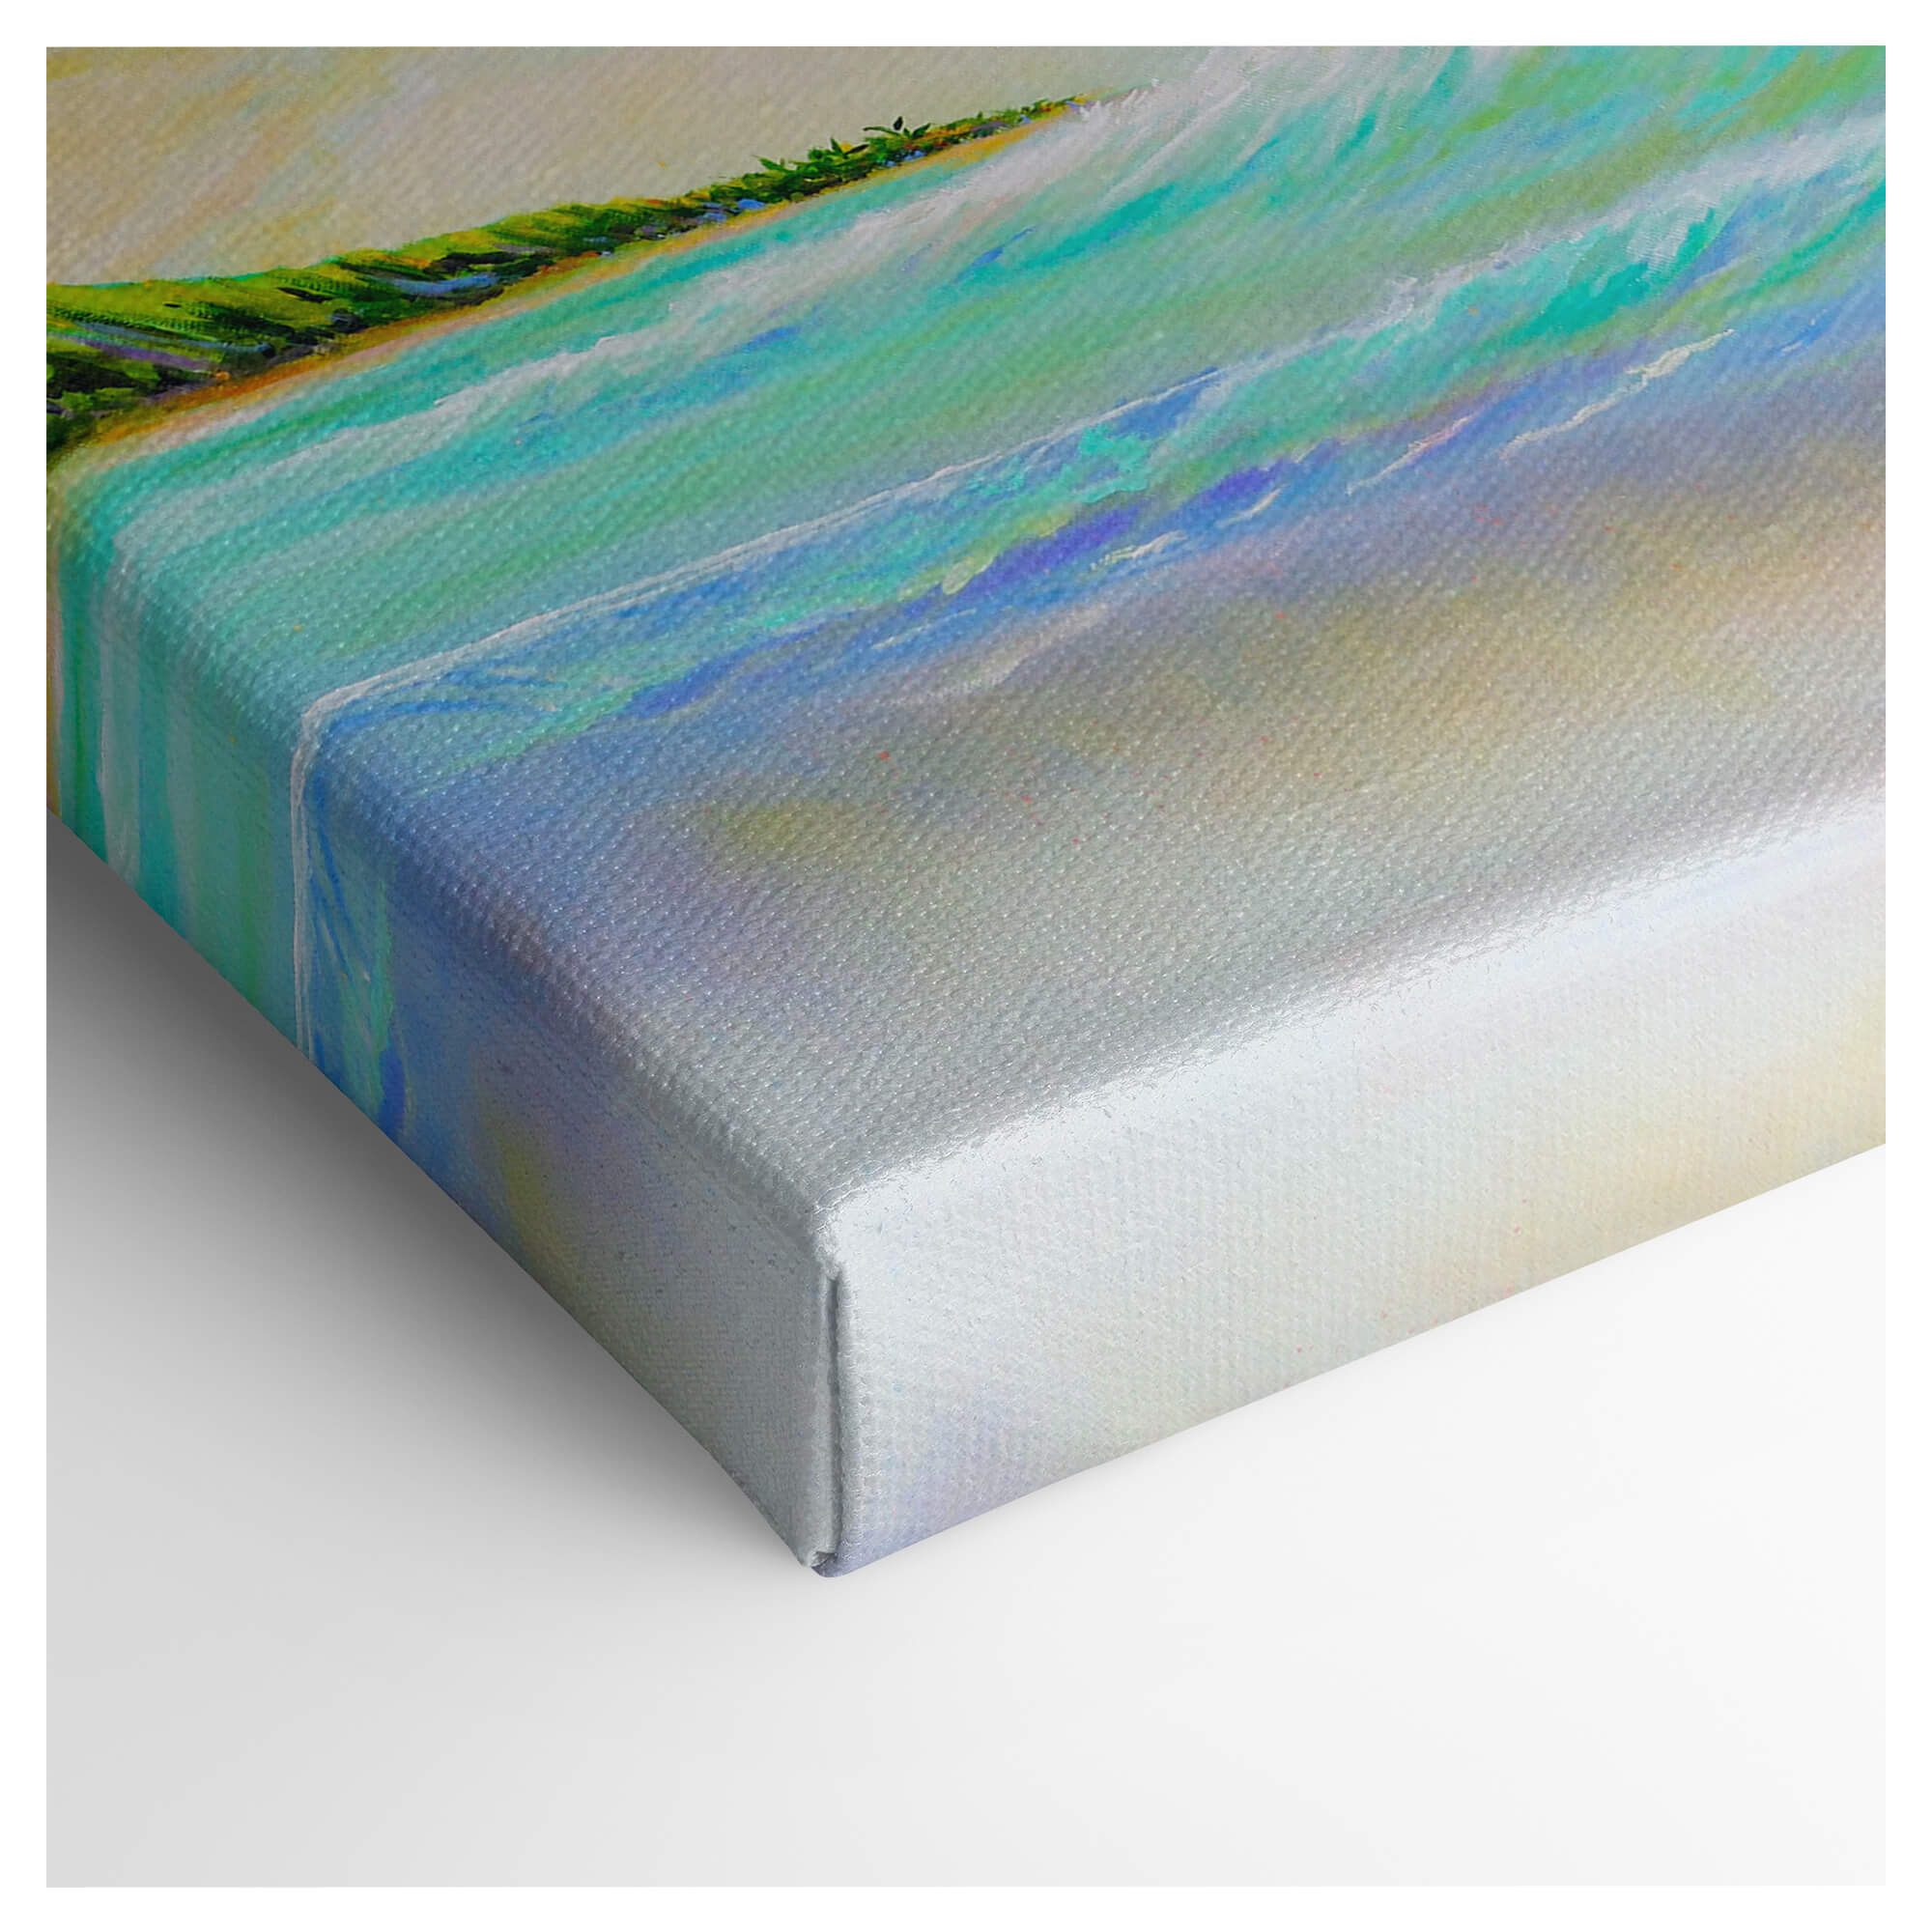 Teal and deep blue colored waves by Hawaii artist Jess Burda